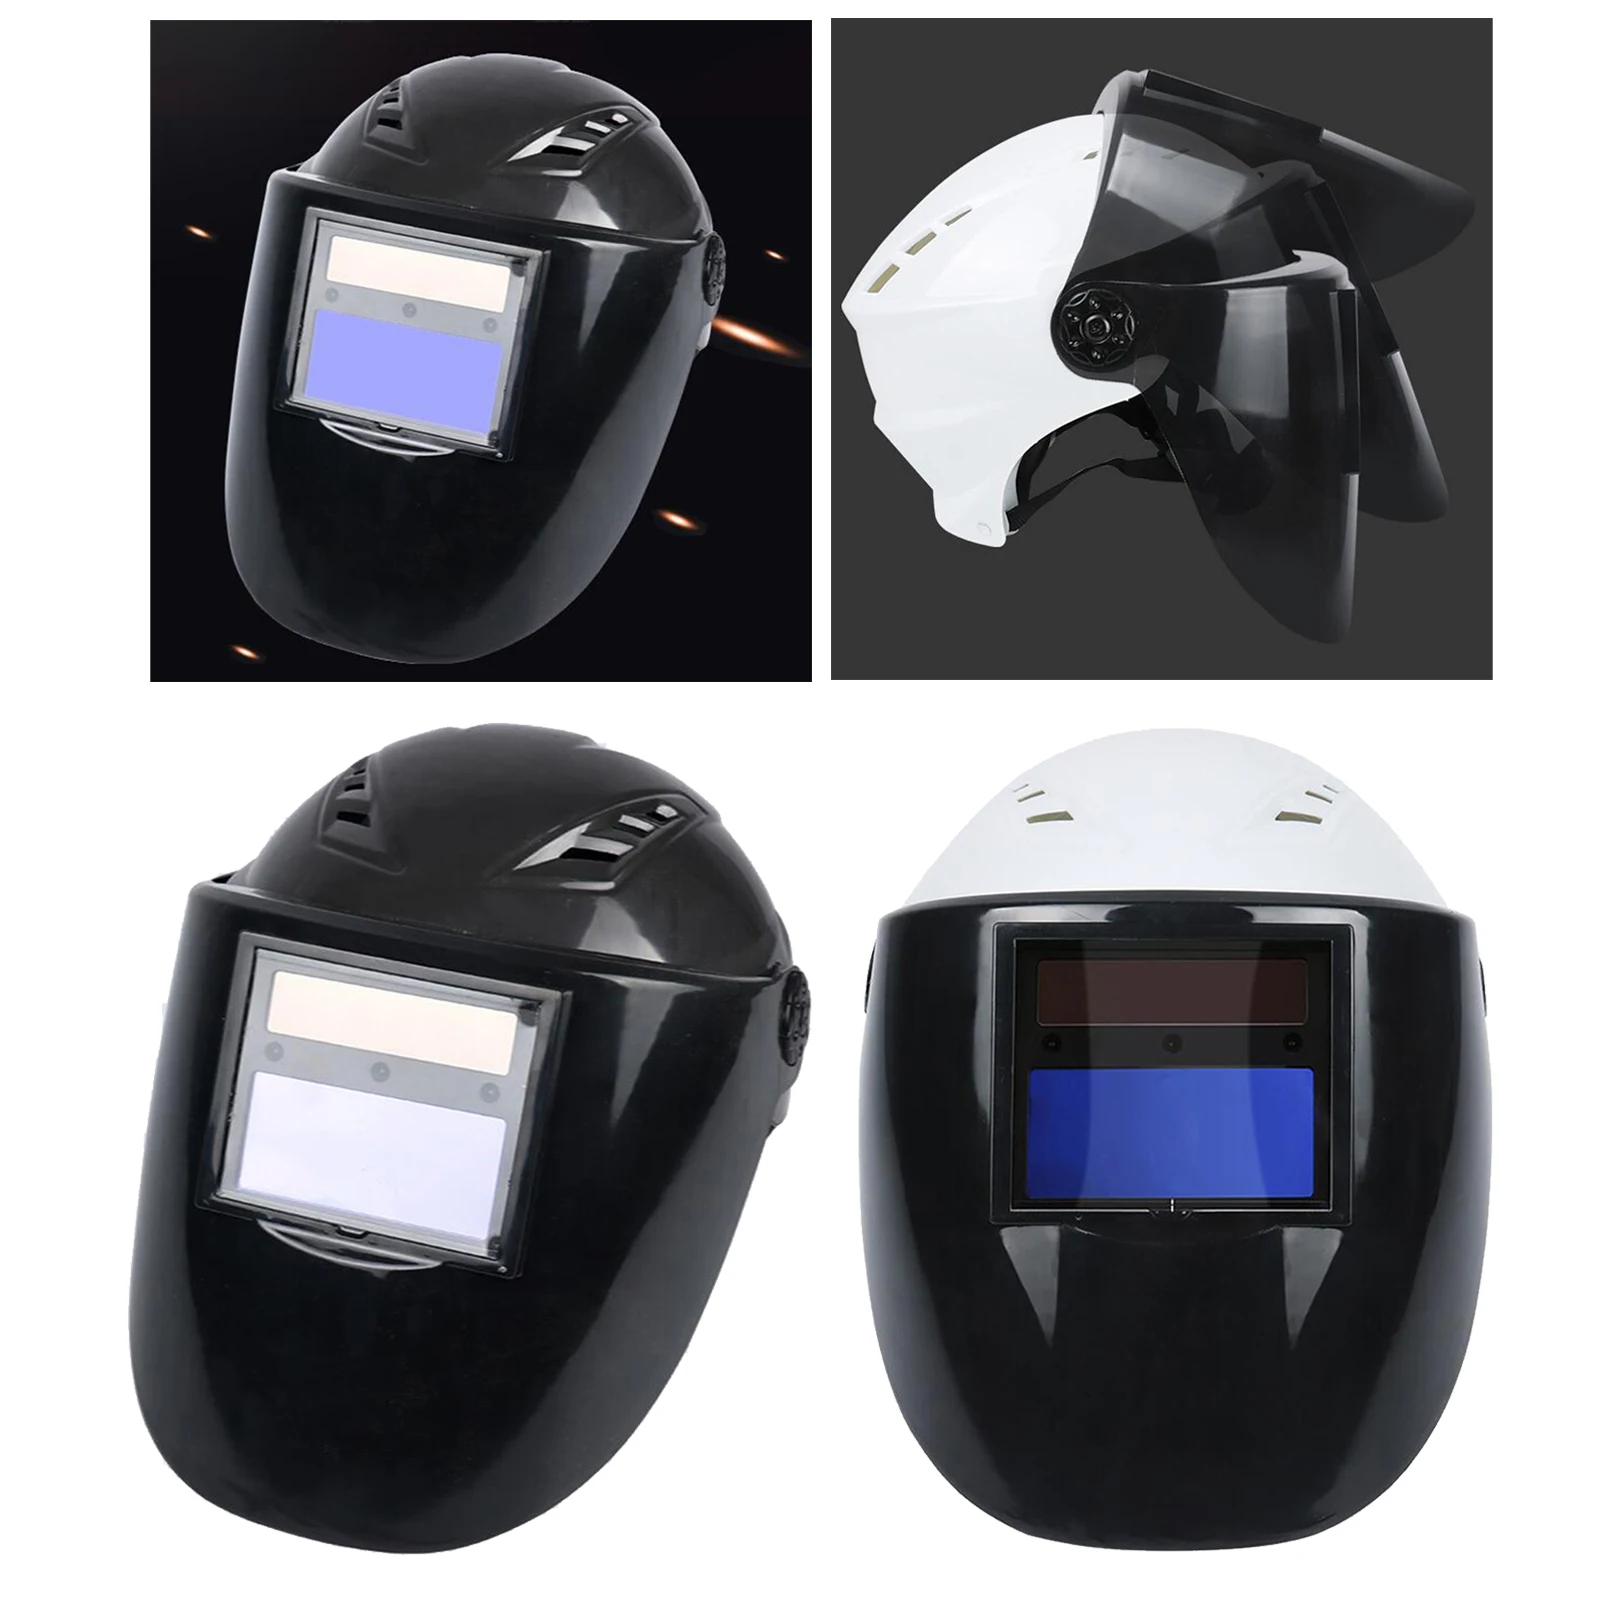 

True Color Solar Auto Darkening Filter Welding Helmet Soldering Adjustable Hood Mask Anti Sparkle for TIG MIG ARC Weld Headgear